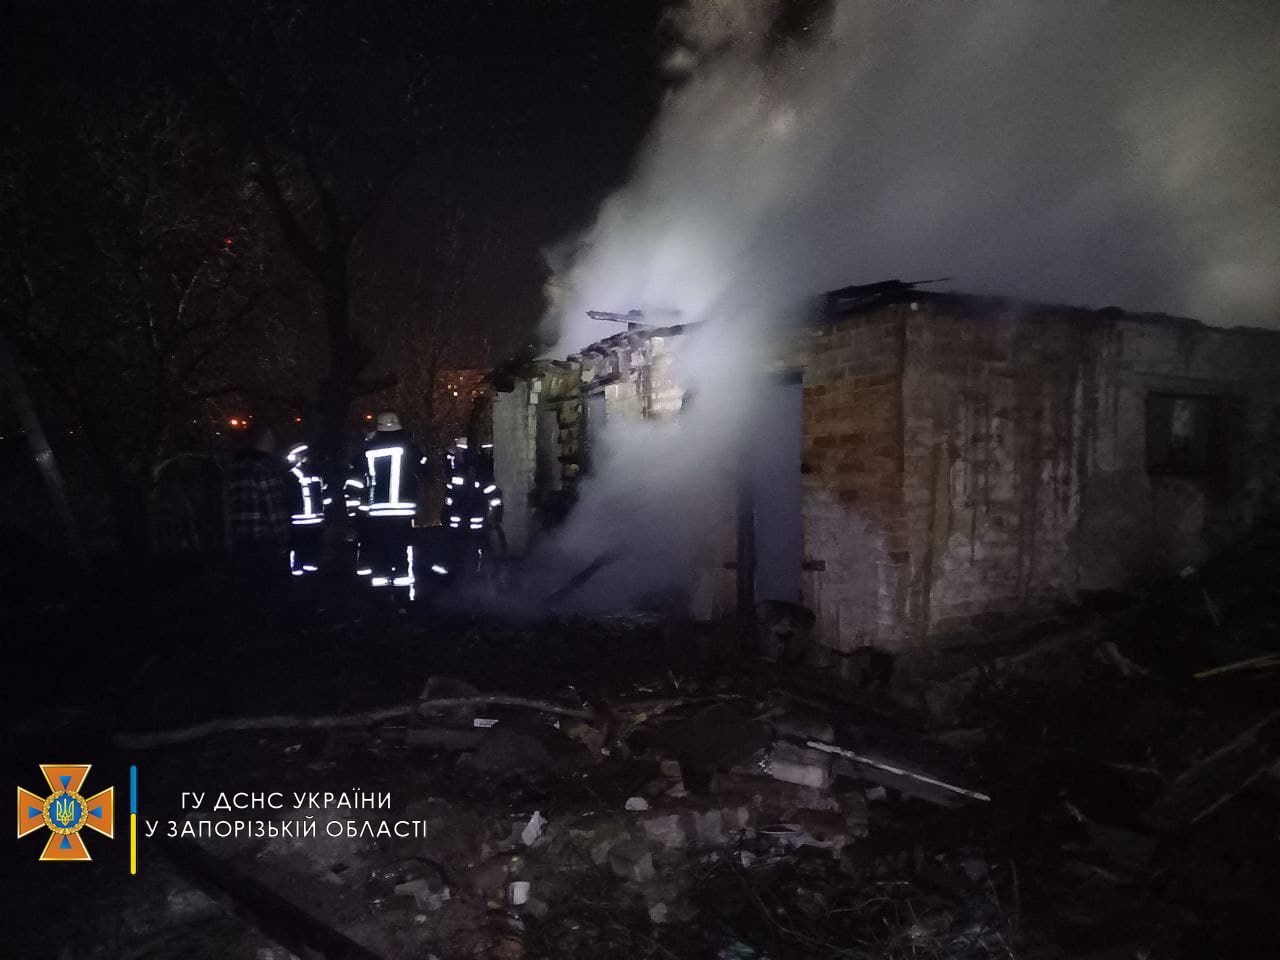 В Запорожье во время пожара погибли ребенок и молодой мужчина (ФОТО)